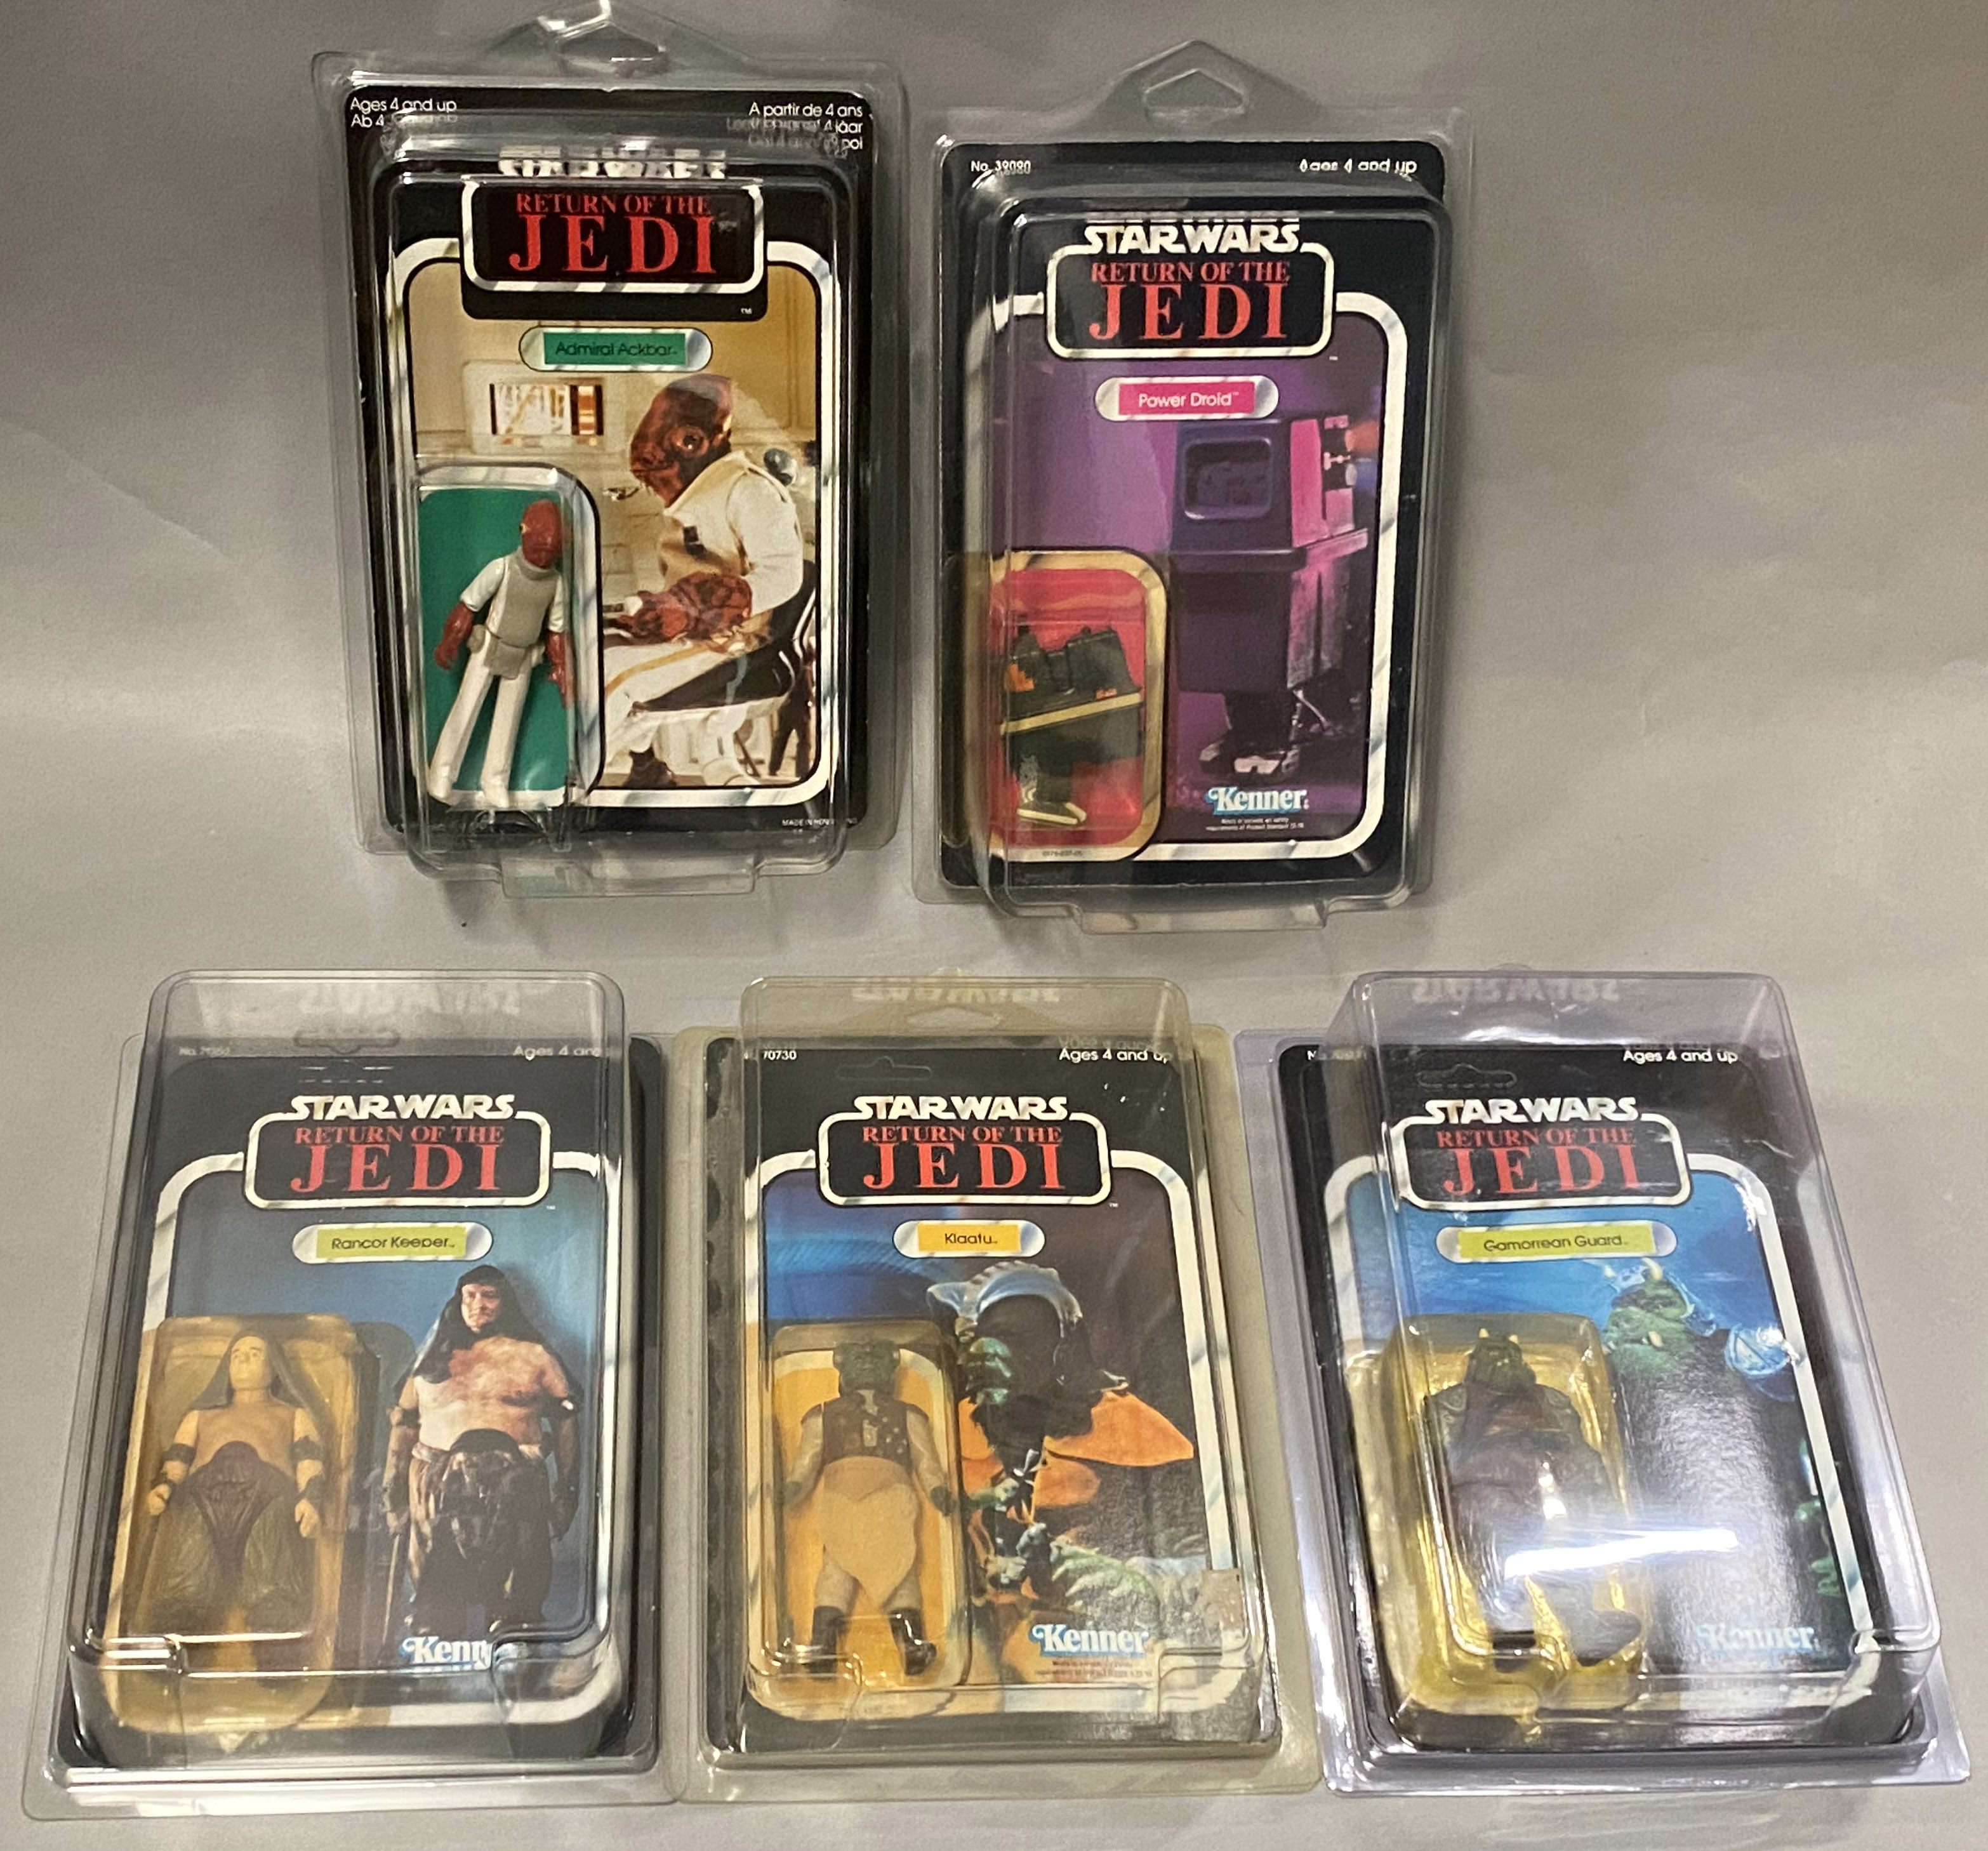 5 vintage Star Wars ROTJ Return Of The Jedi figures on original backing cards: Admiral Ackbar, Power